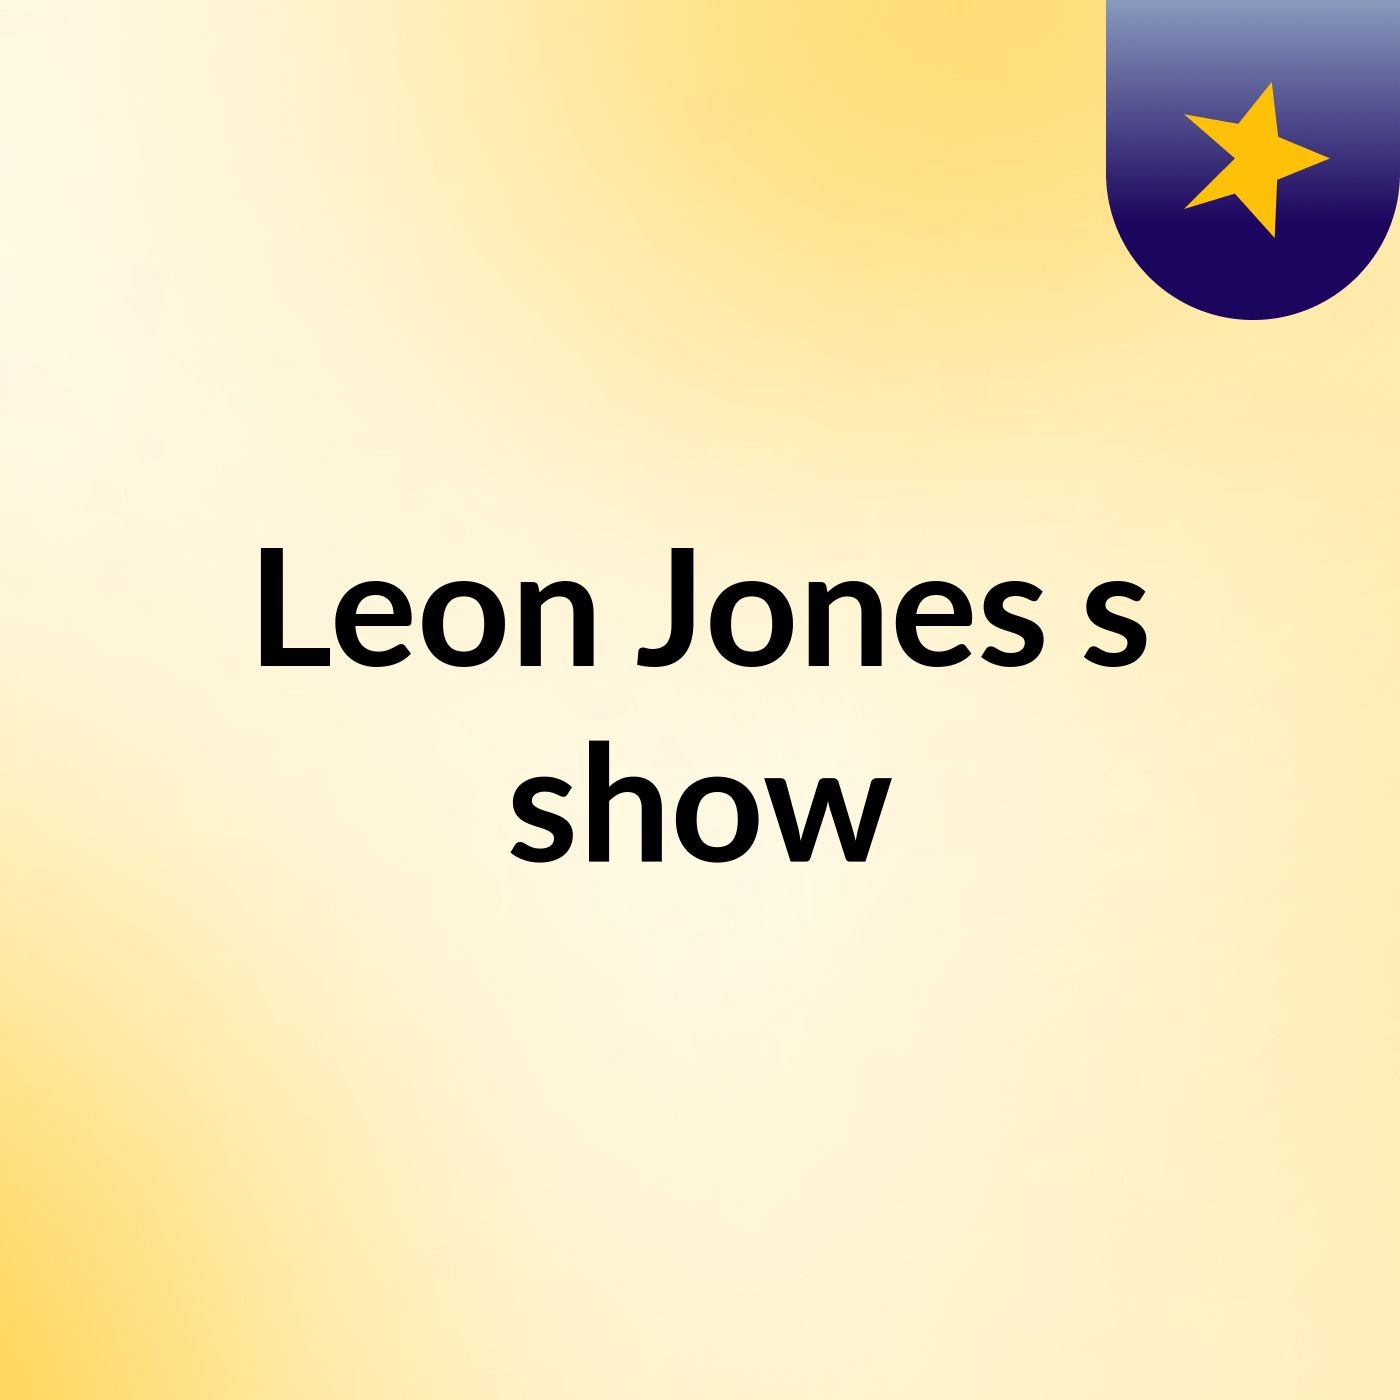 Leon Jones's show